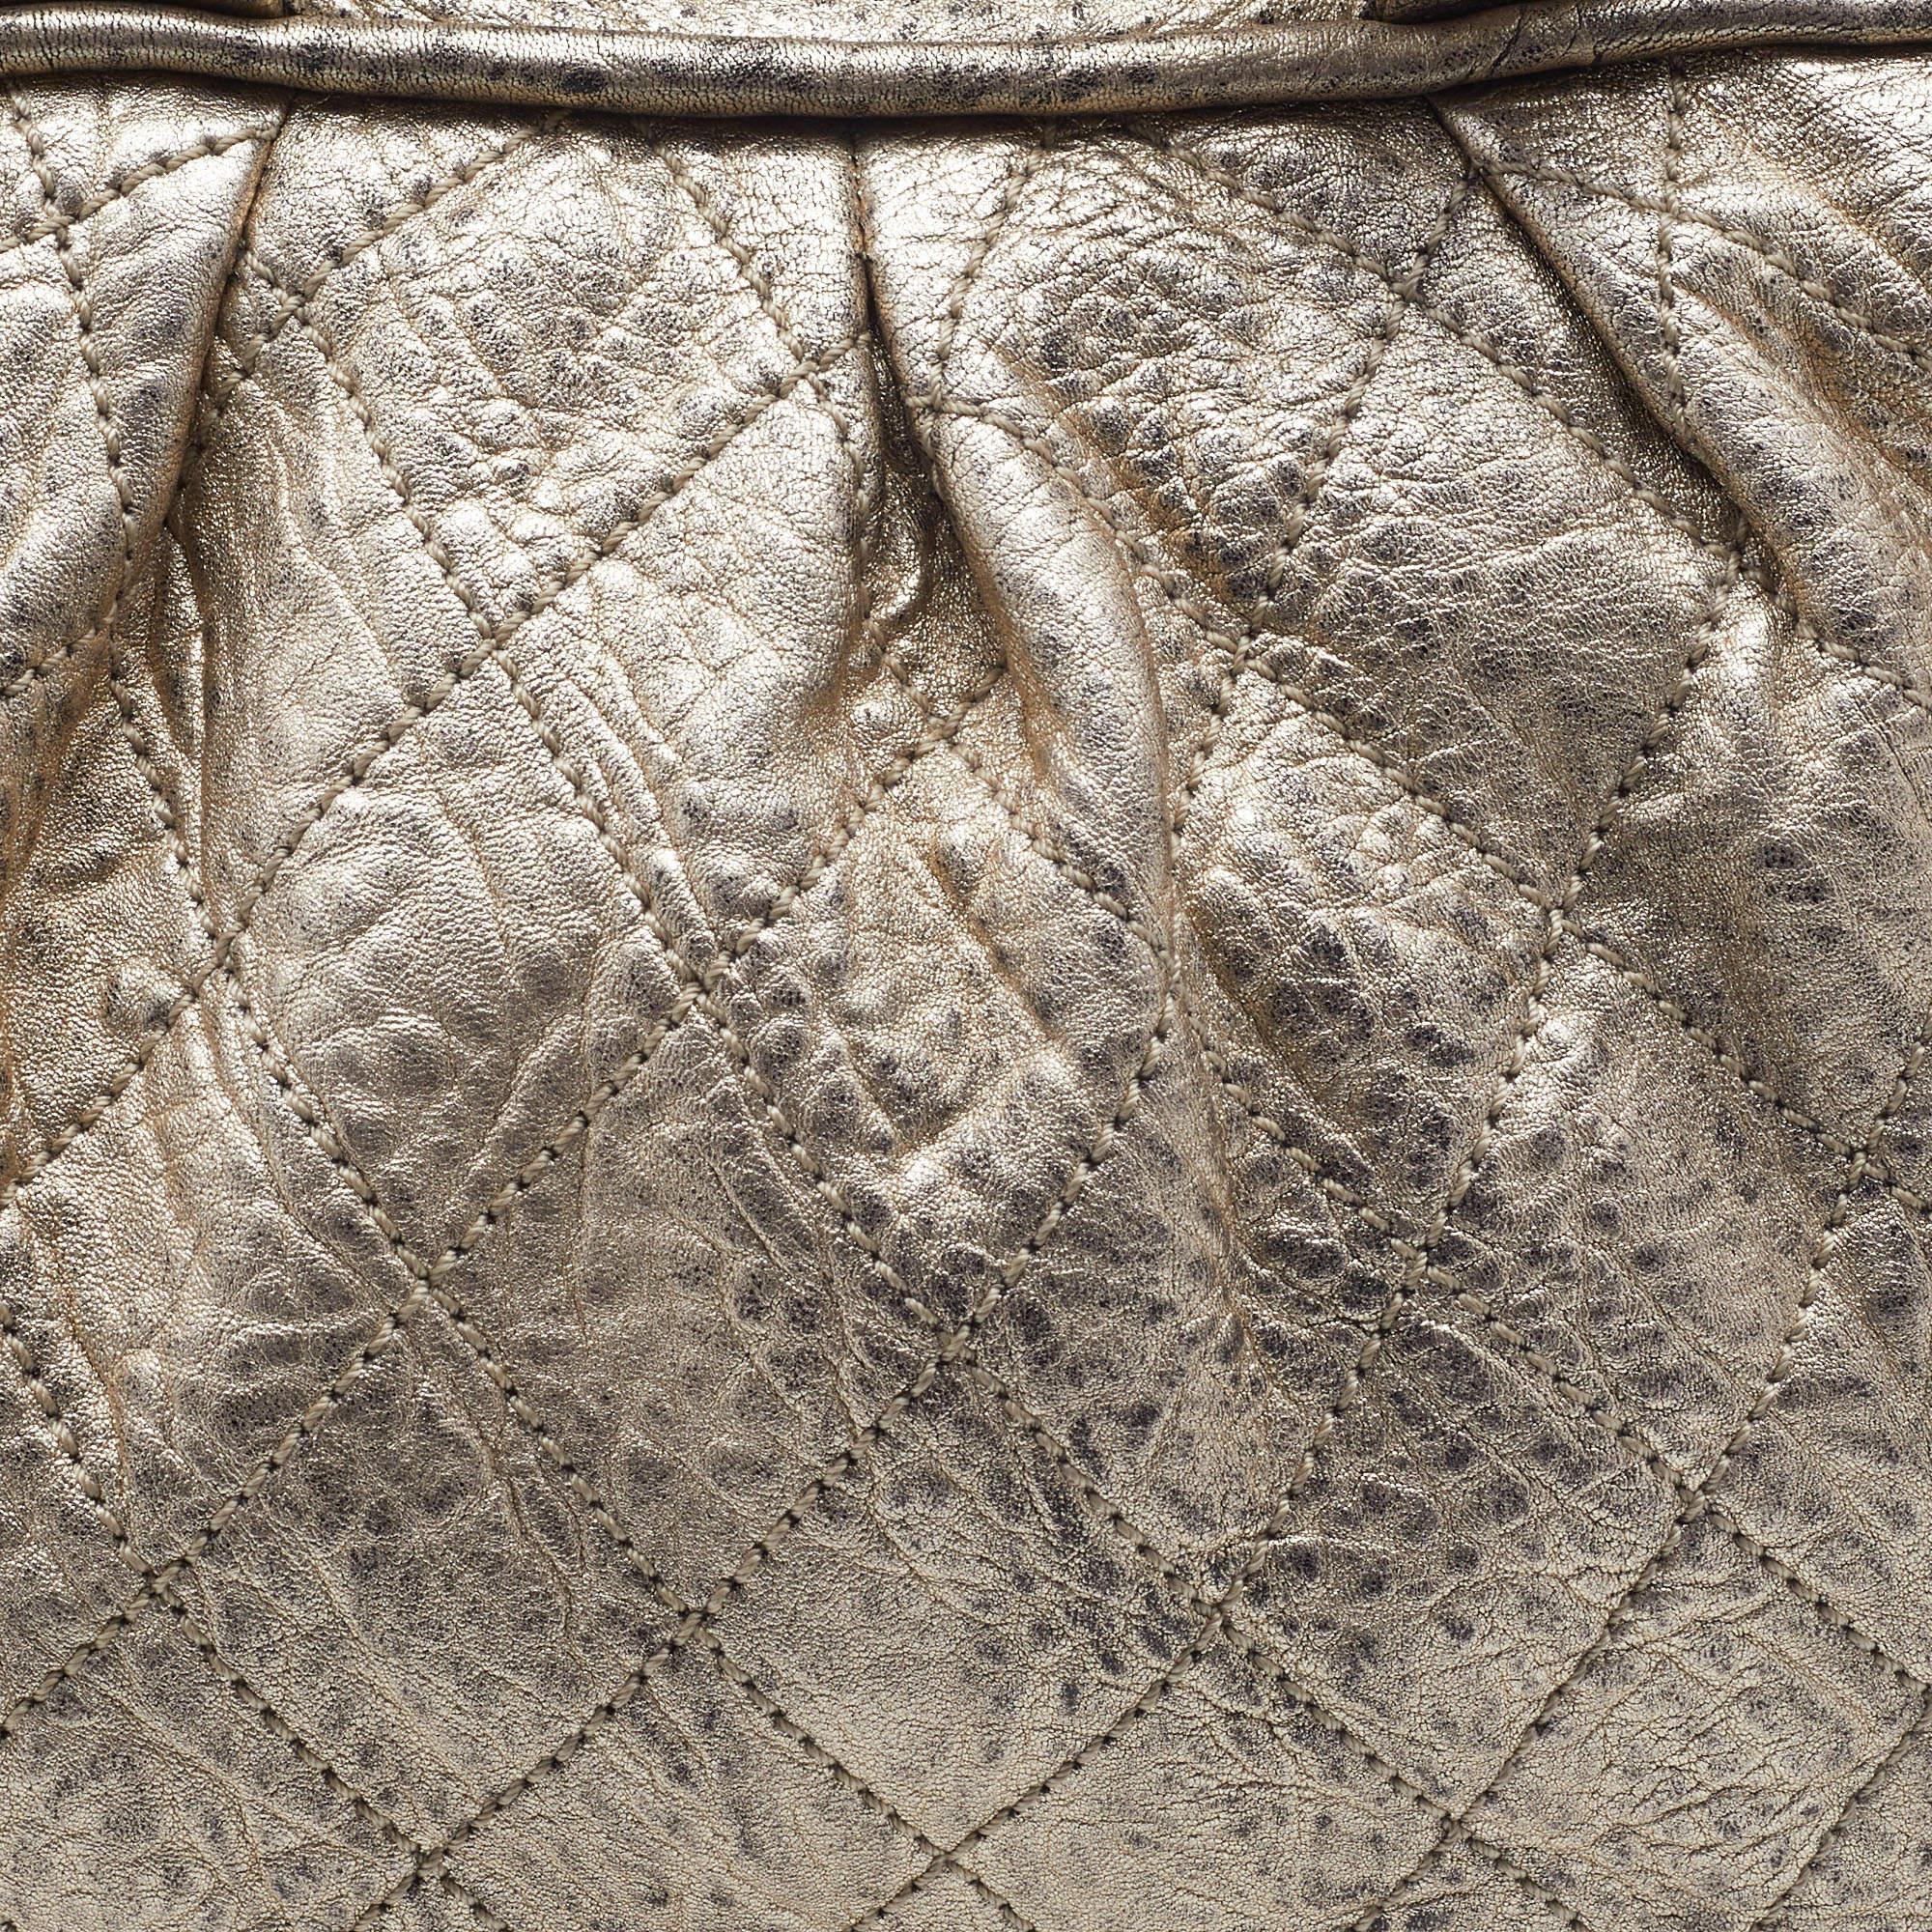 Chanel Gold Textured Leather Wild Stich Weekender Bag 2